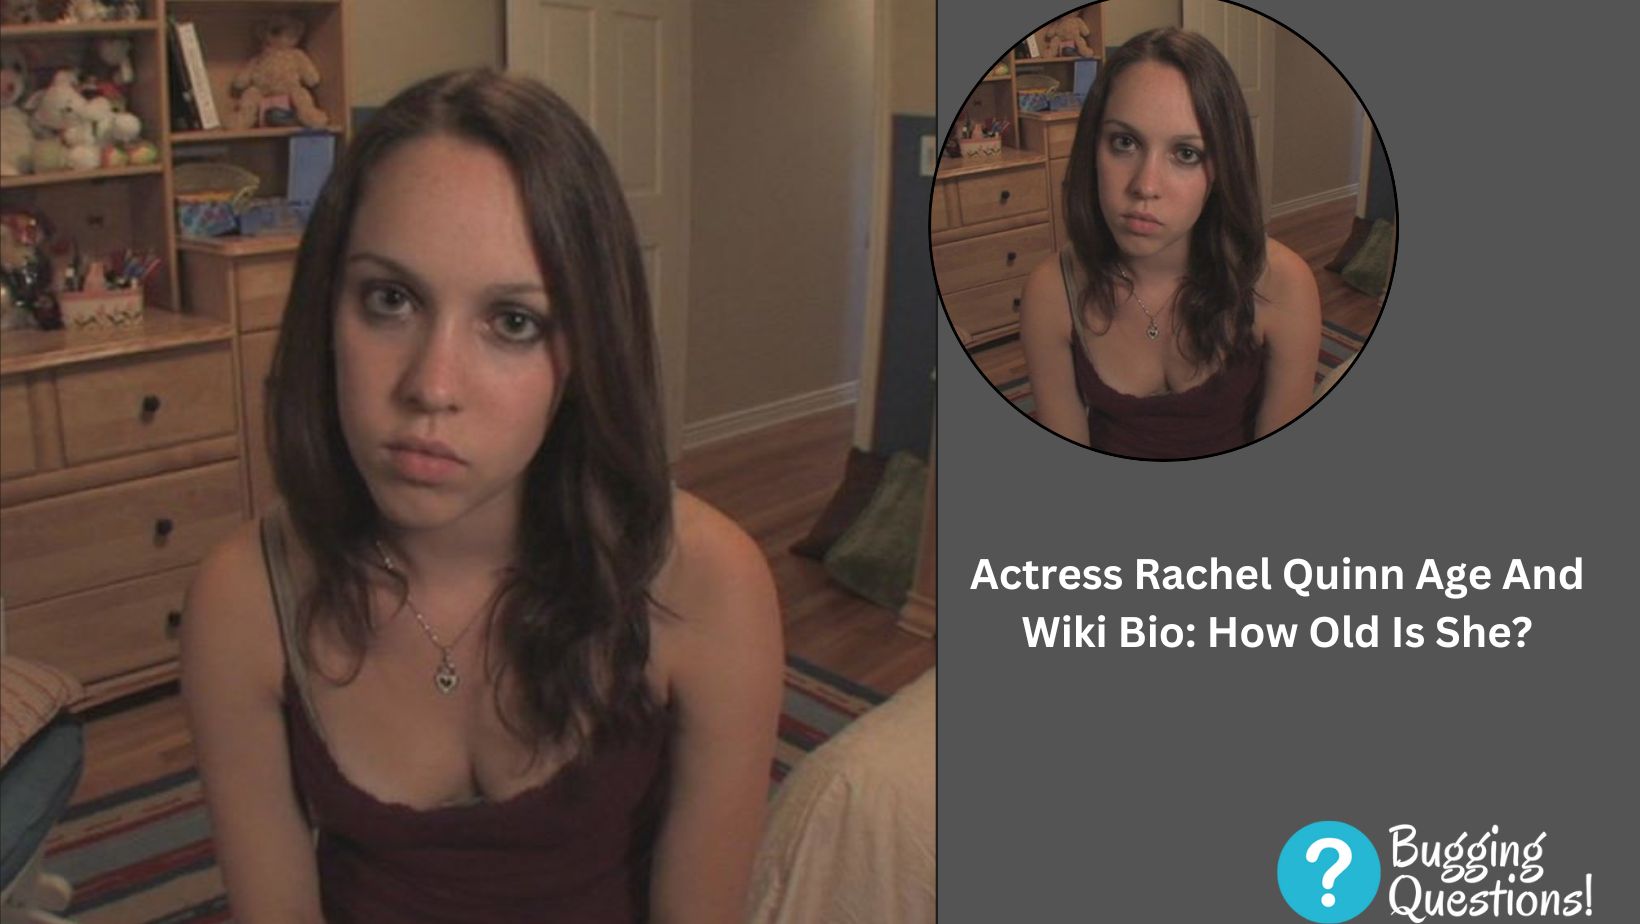 Actress Rachel Quinn Age And Wiki Bio